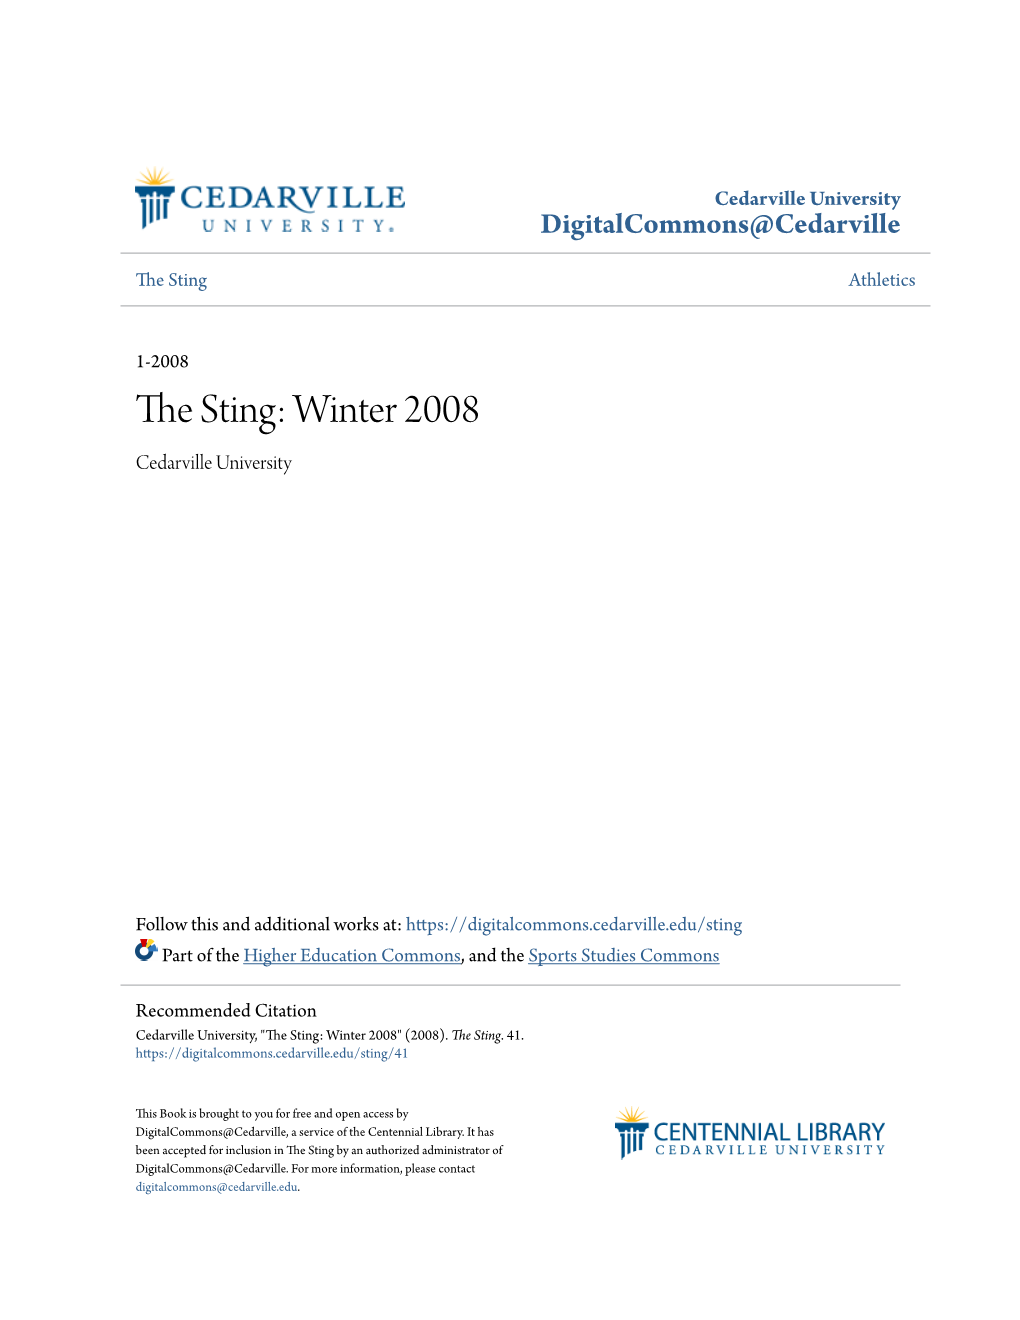 The Sting: Winter 2008